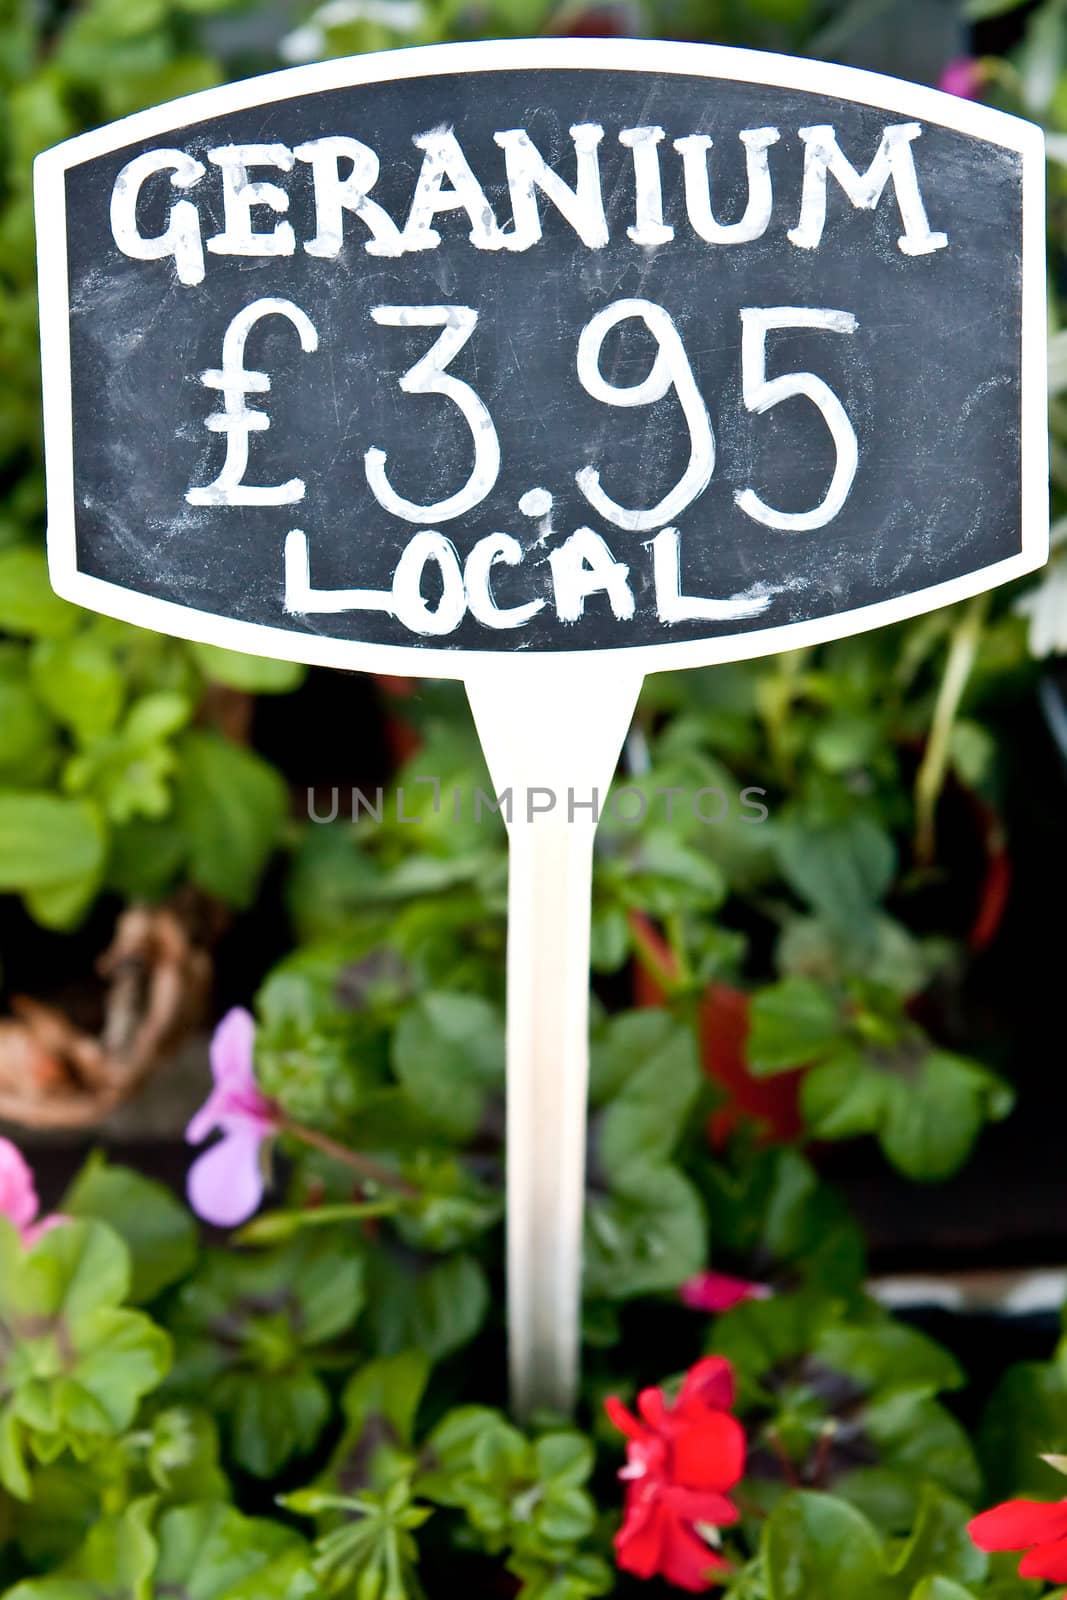 Price tag on a geranium plant